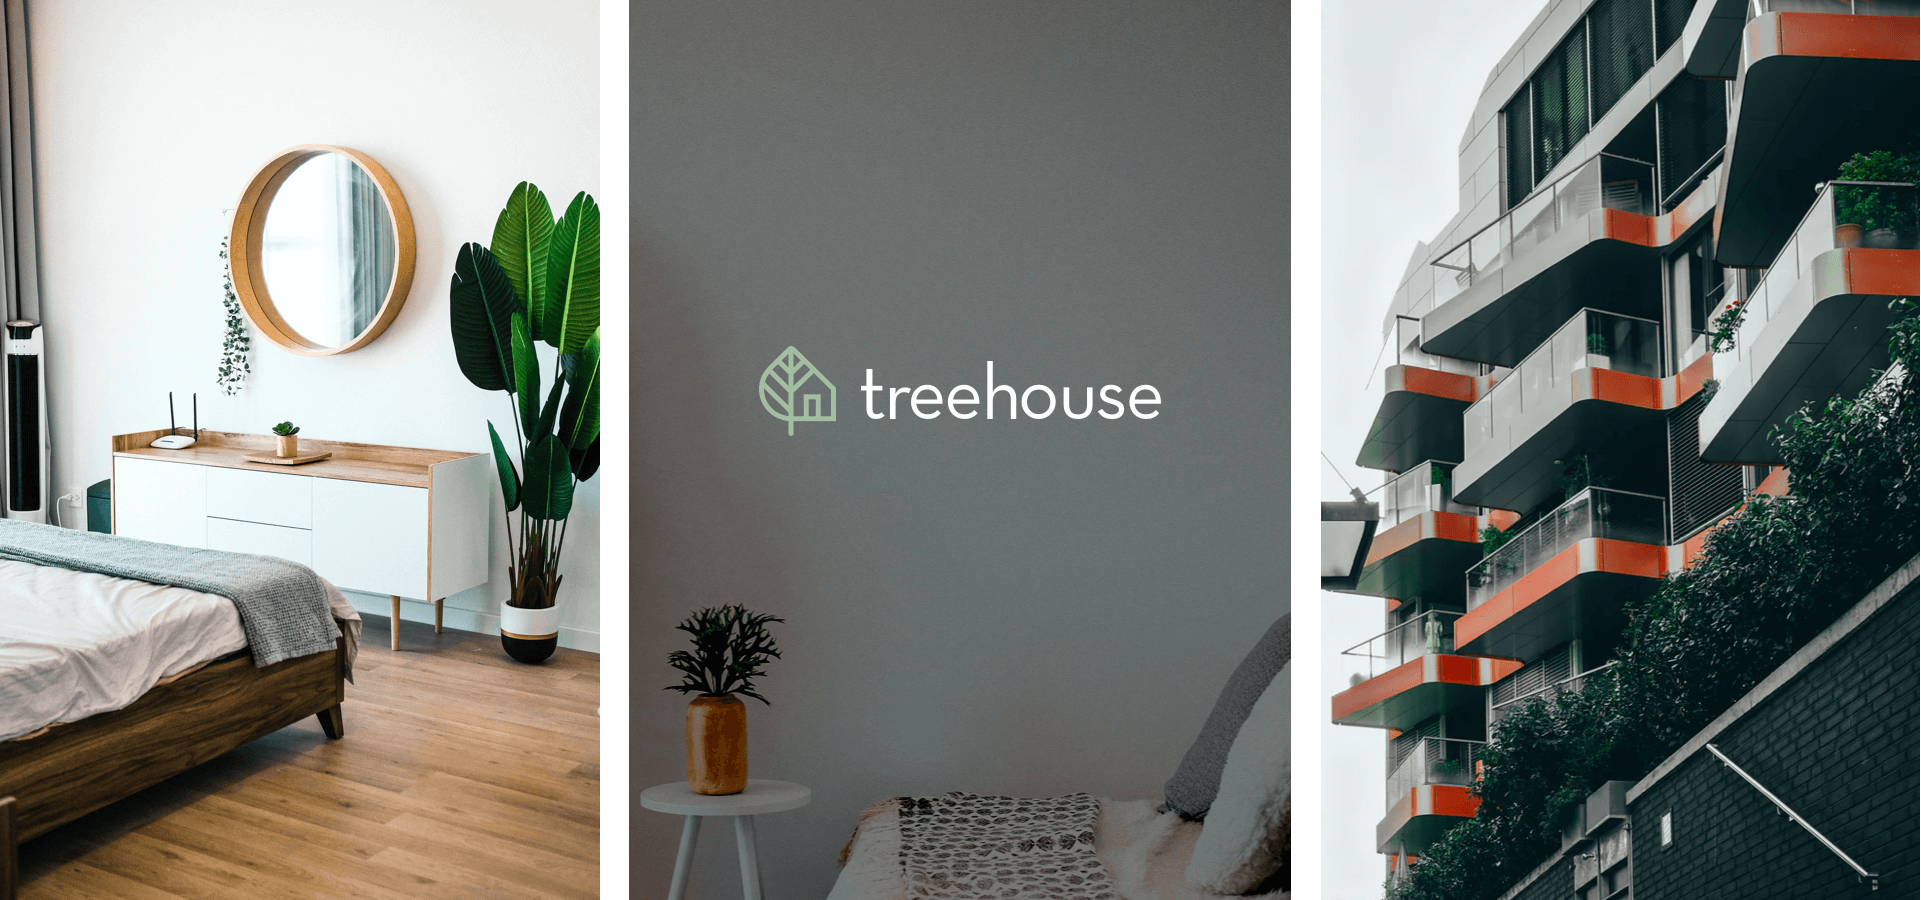 treehouse_challenge-1